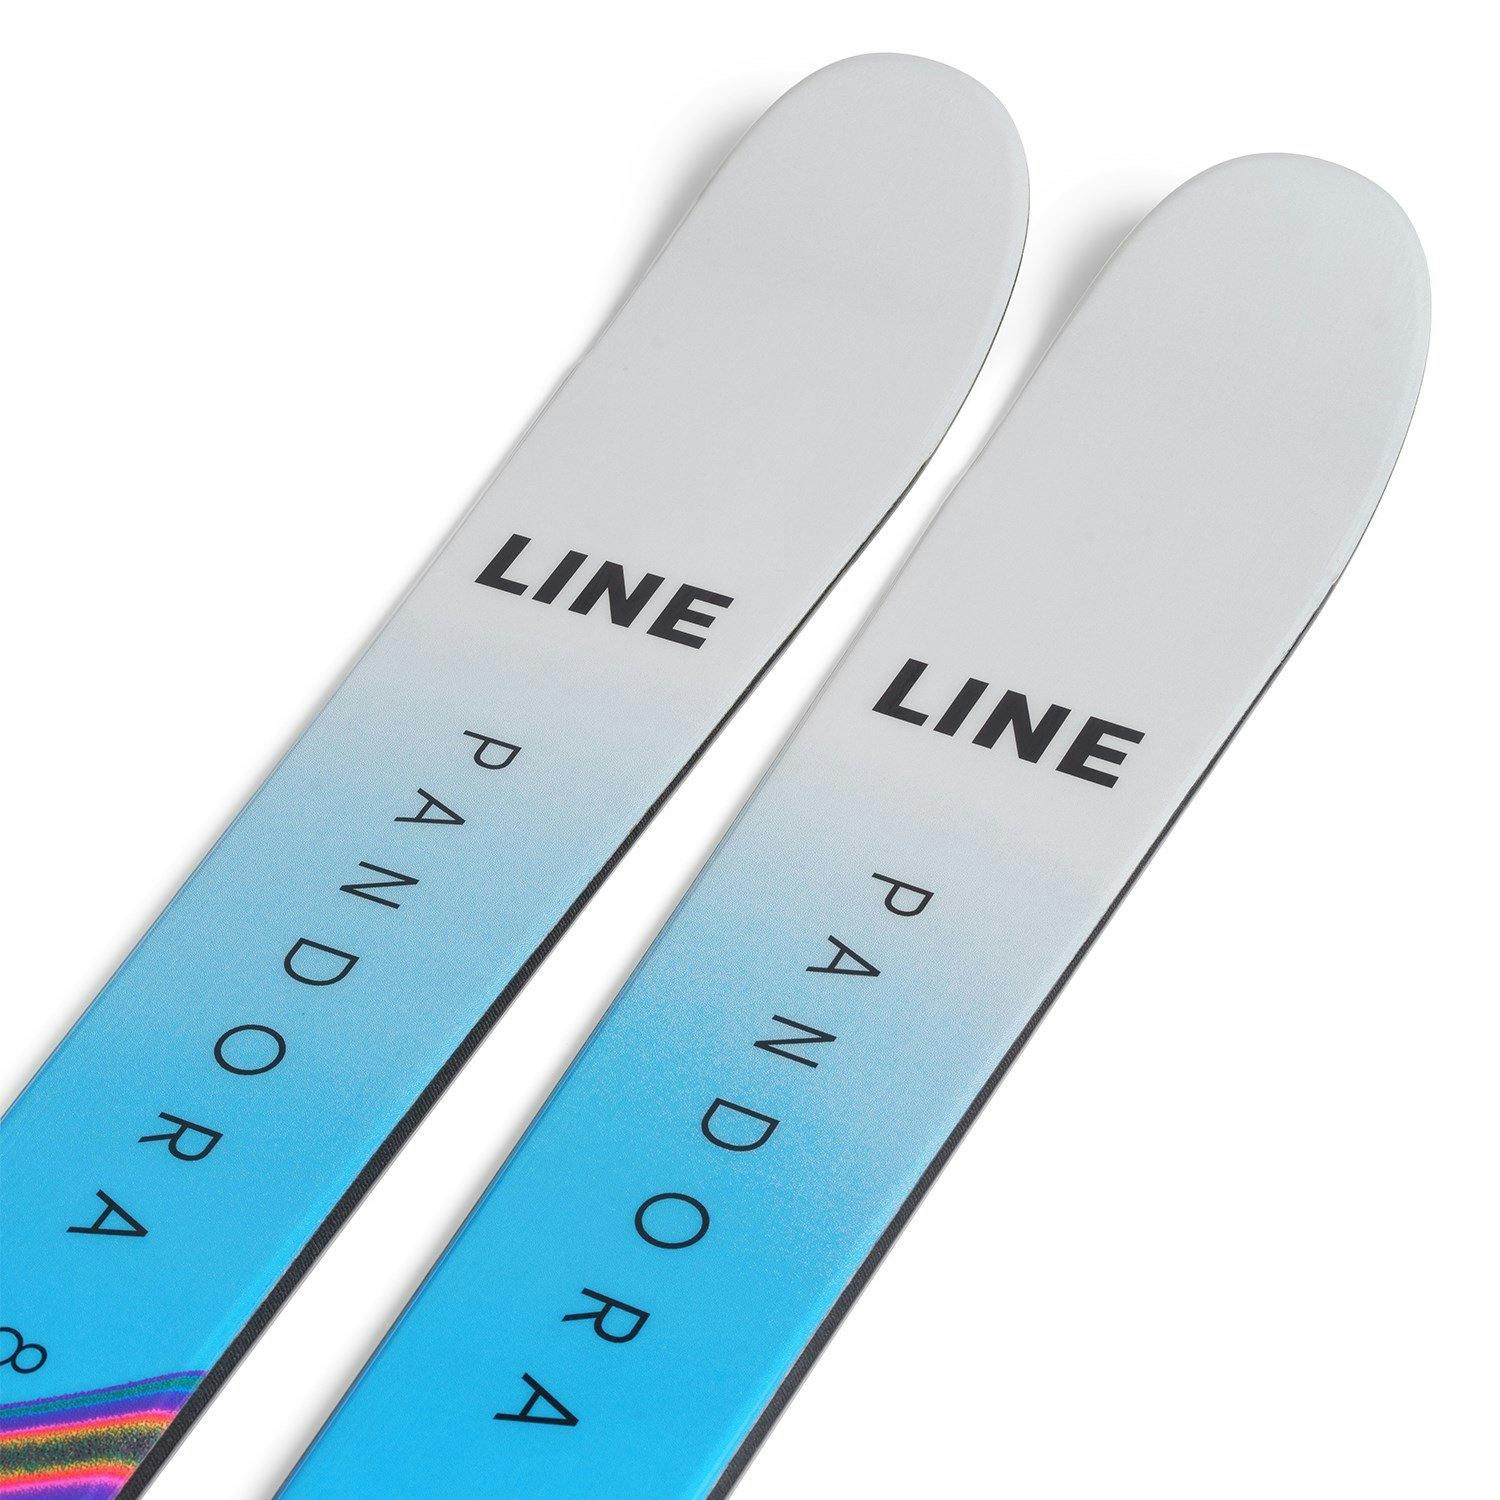 Line Pandora 84 Skis · Women's · 2023